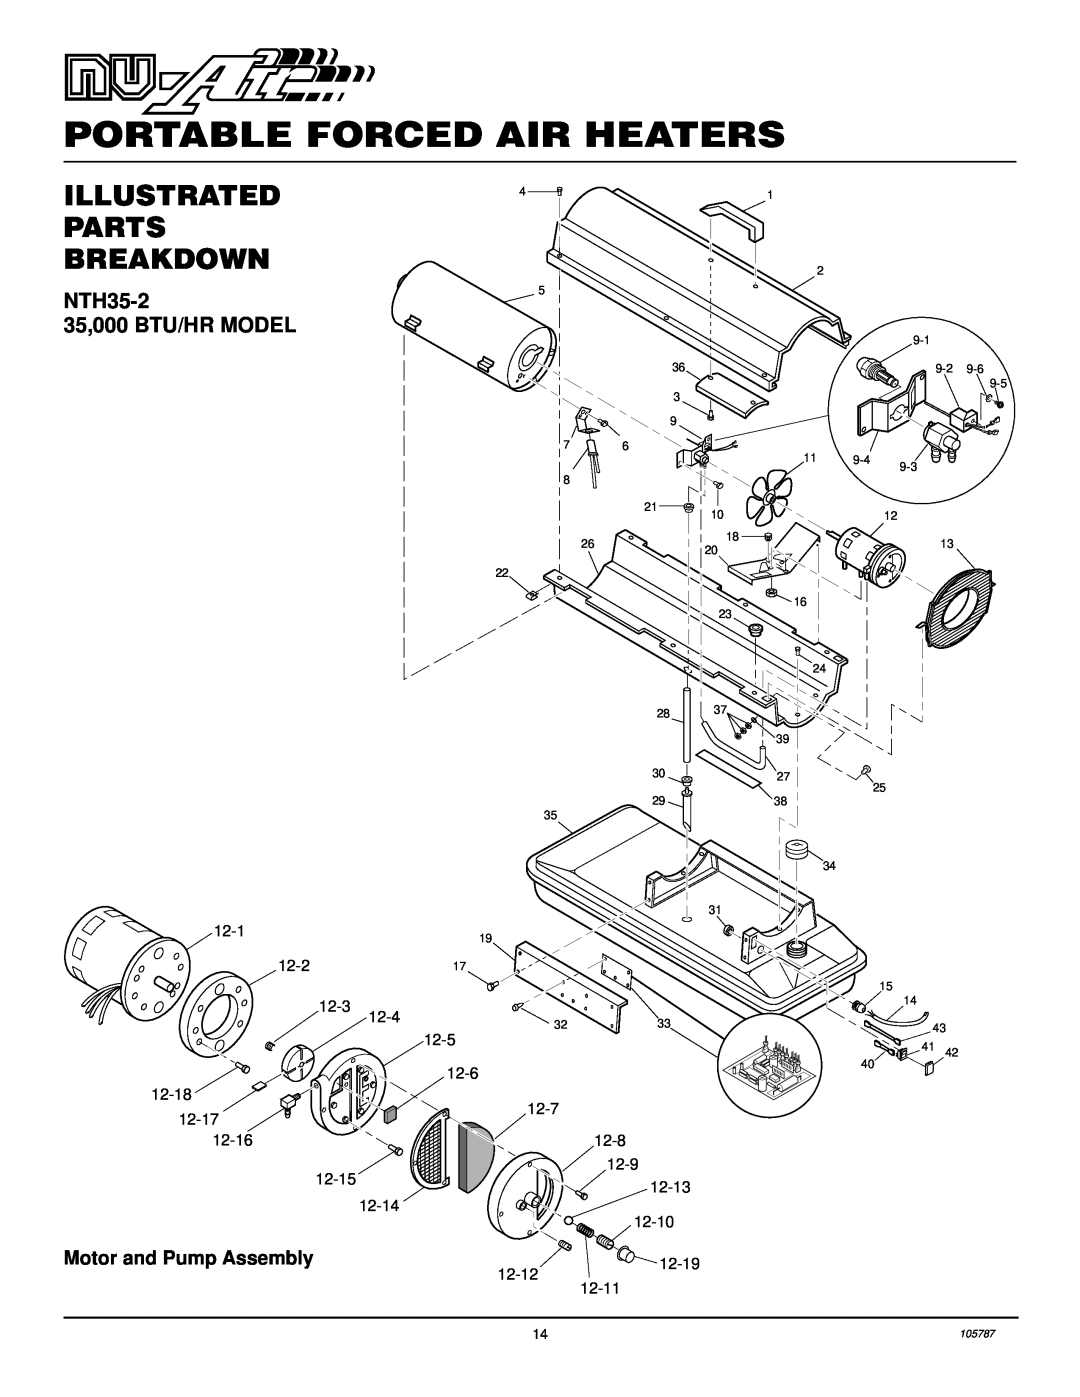 Desa NTH70-2, NTH50-2, NTH100-2 Illustrated Parts Breakdown, NTH35-2 35,000 BTU/HR MODEL, Portable Forced Air Heaters 